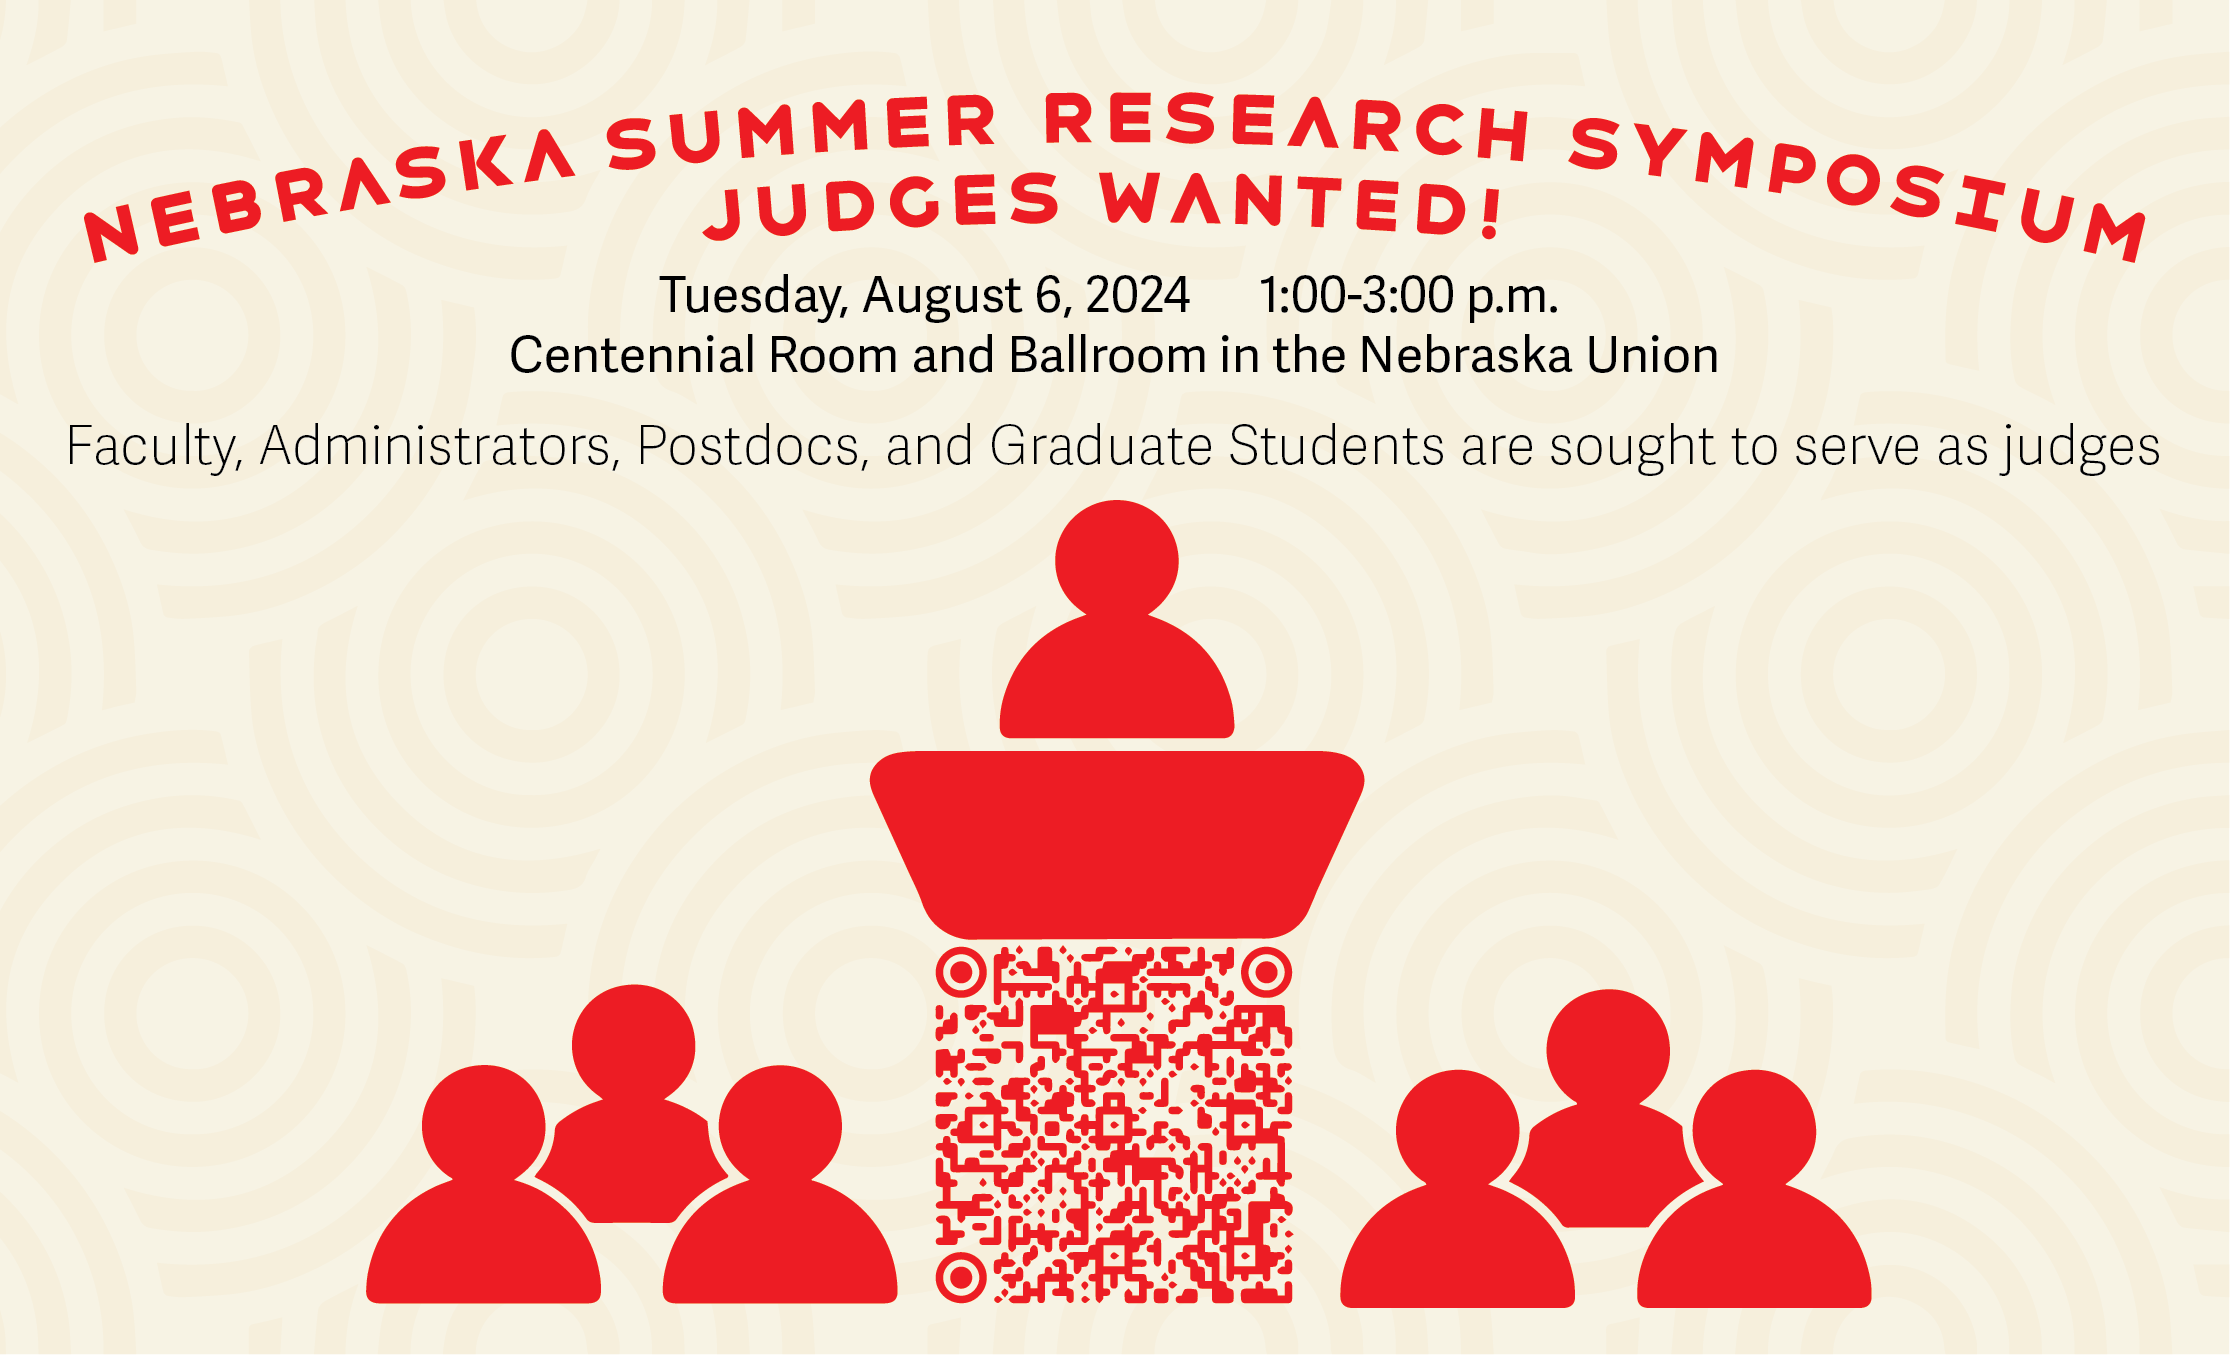 Judges needed for Nebraska Summer Research Symposium on Aug. 6